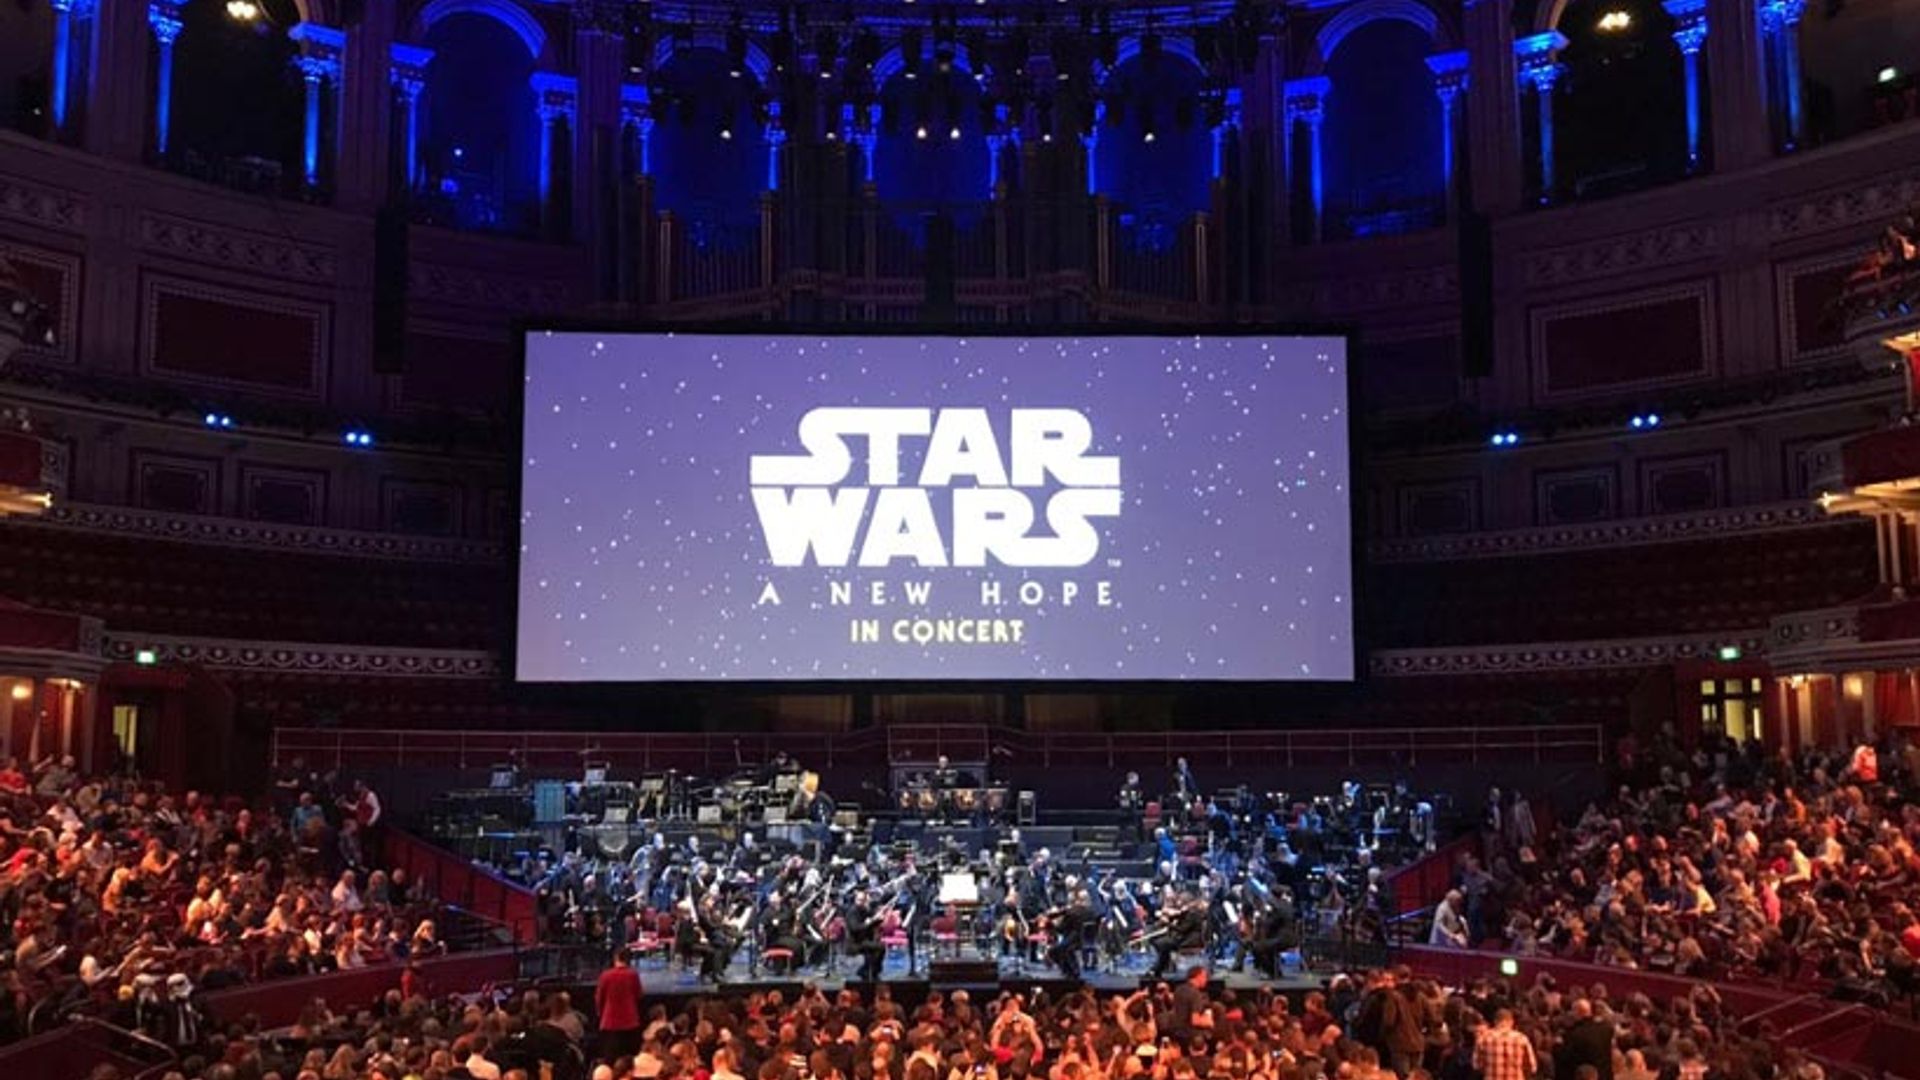 John Williams' live music brings Star Wars alive at the Albert Hall